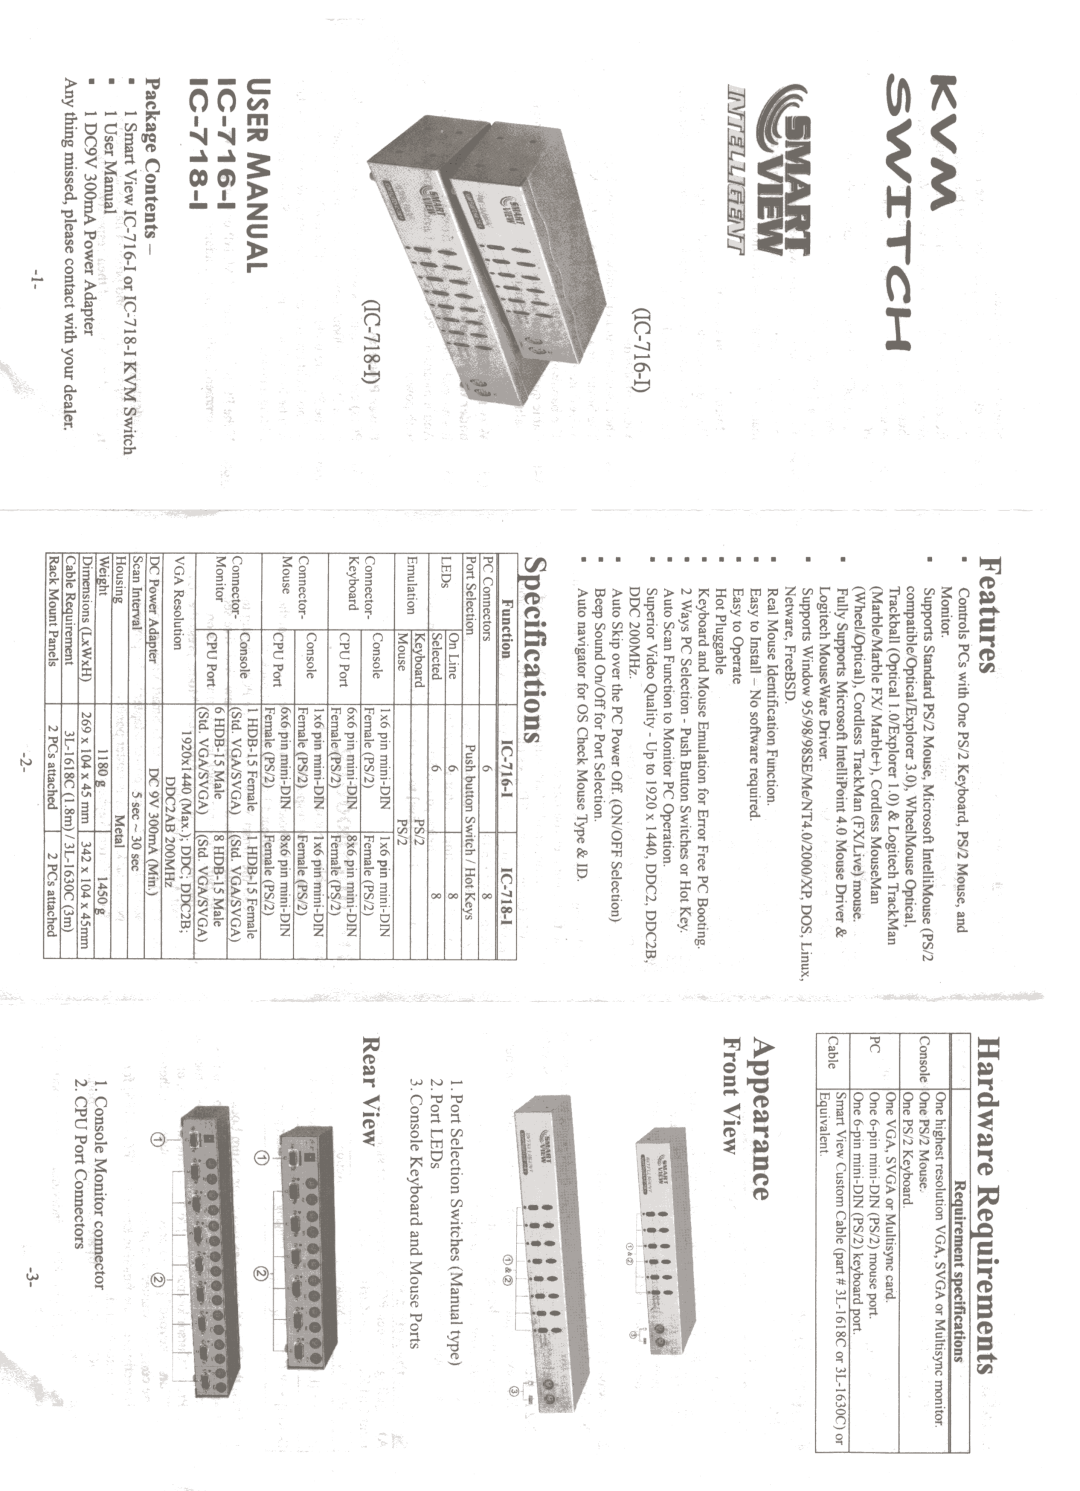 QVS IC-718-1, IC-716-1 manual 